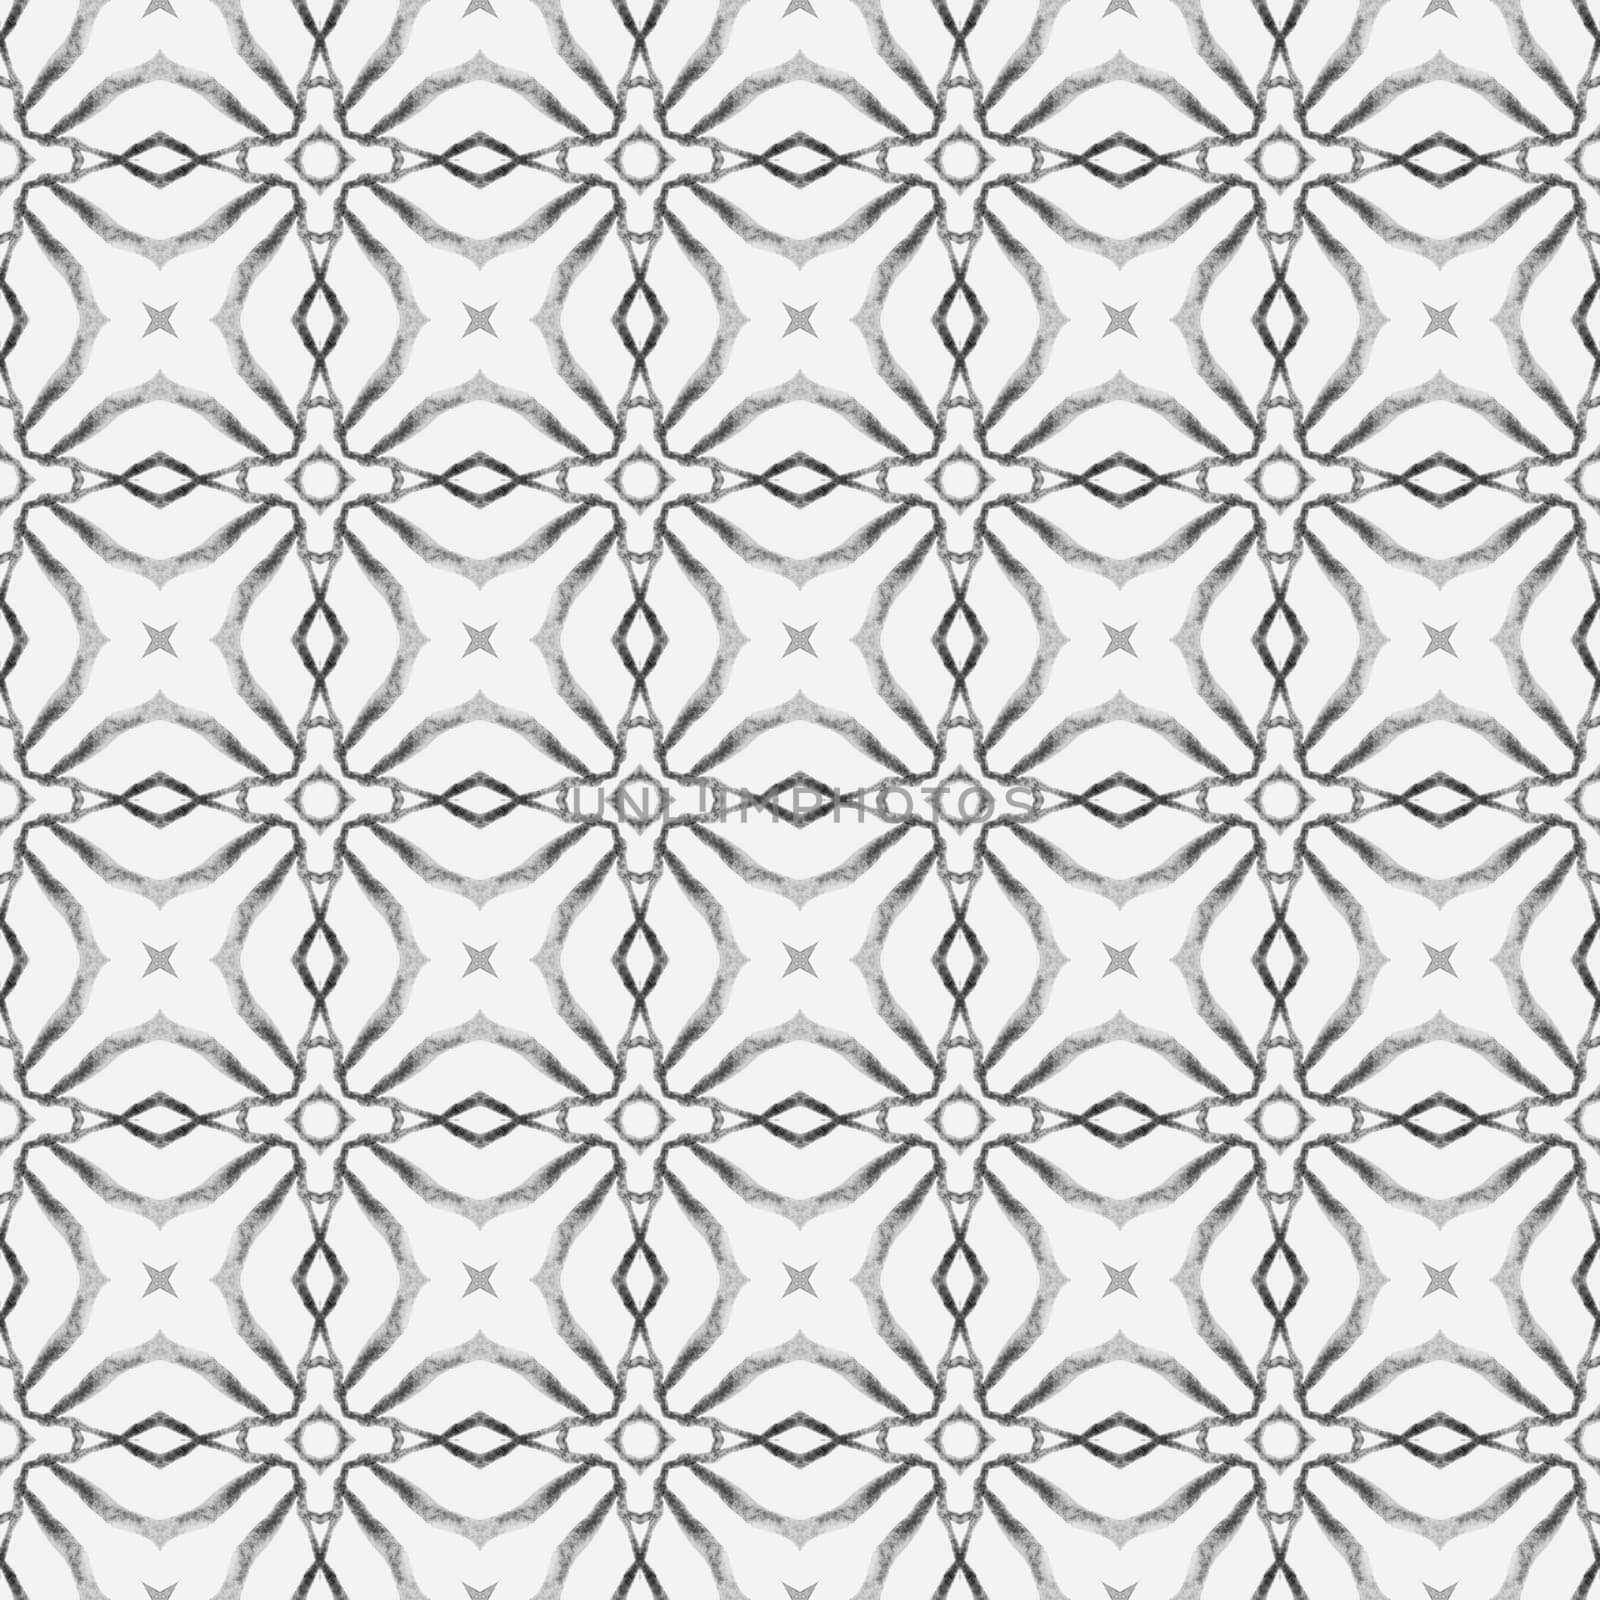 Mosaic seamless pattern. Black and white vibrant boho chic summer design. Hand drawn green mosaic seamless border. Textile ready curious print, swimwear fabric, wallpaper, wrapping.